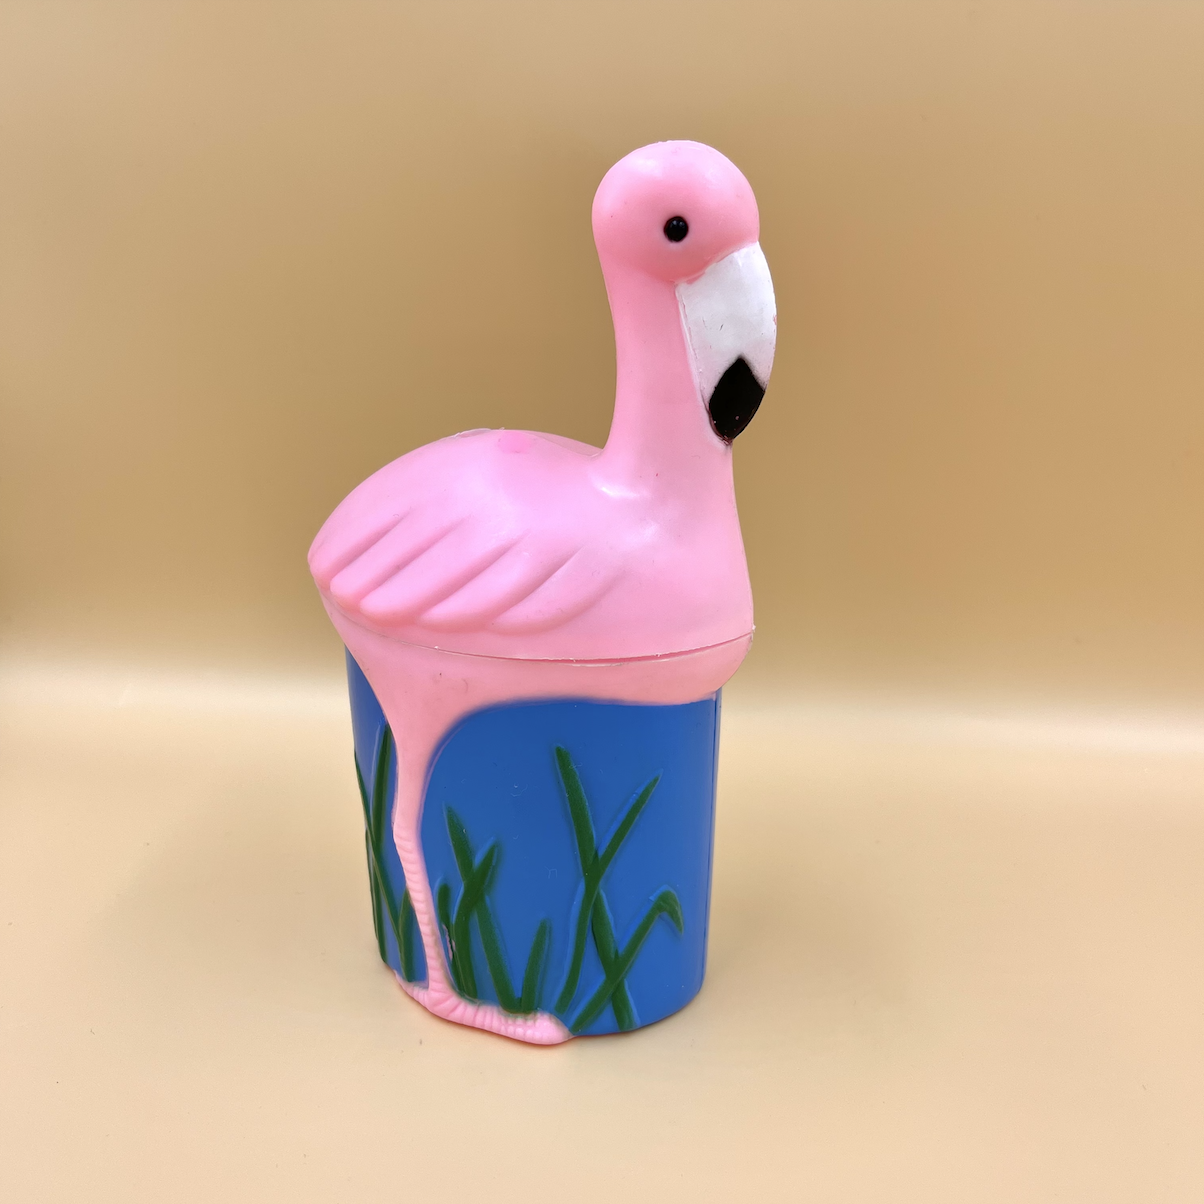 Flamingo Cup